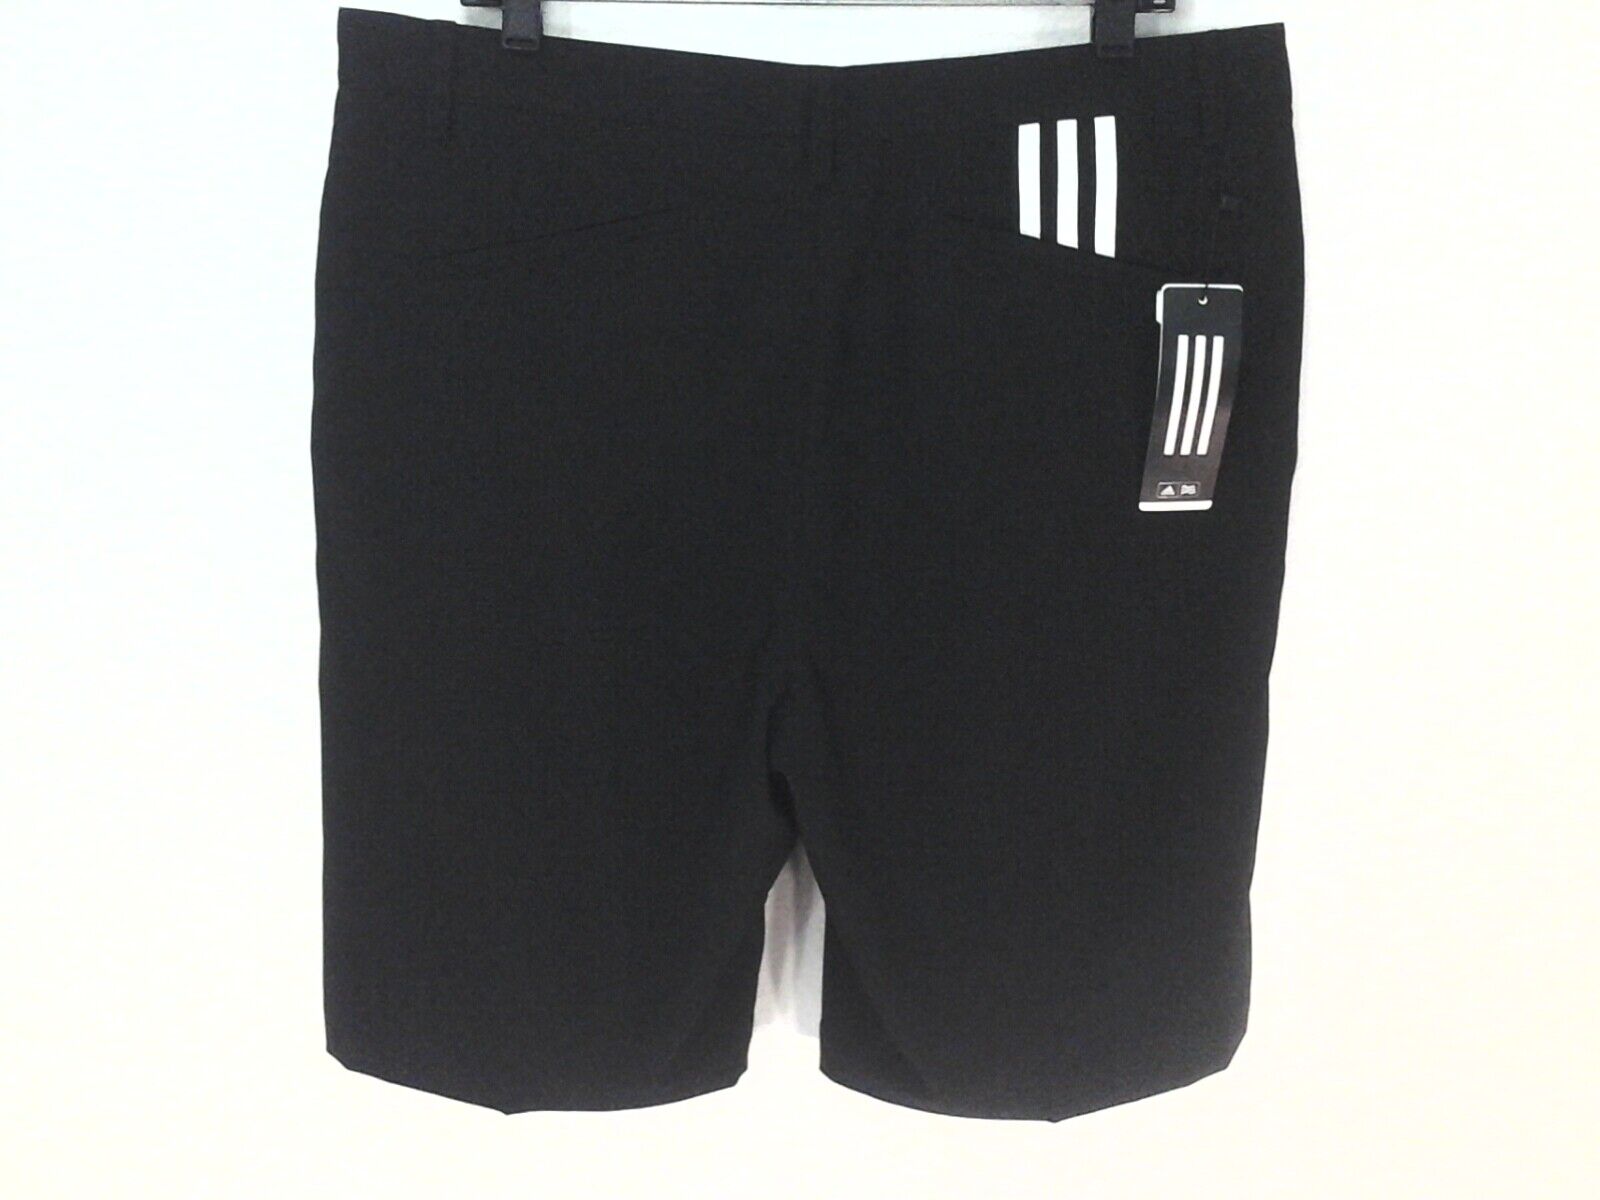 ADIDAS Golf Shorts Black White 3 Stripes